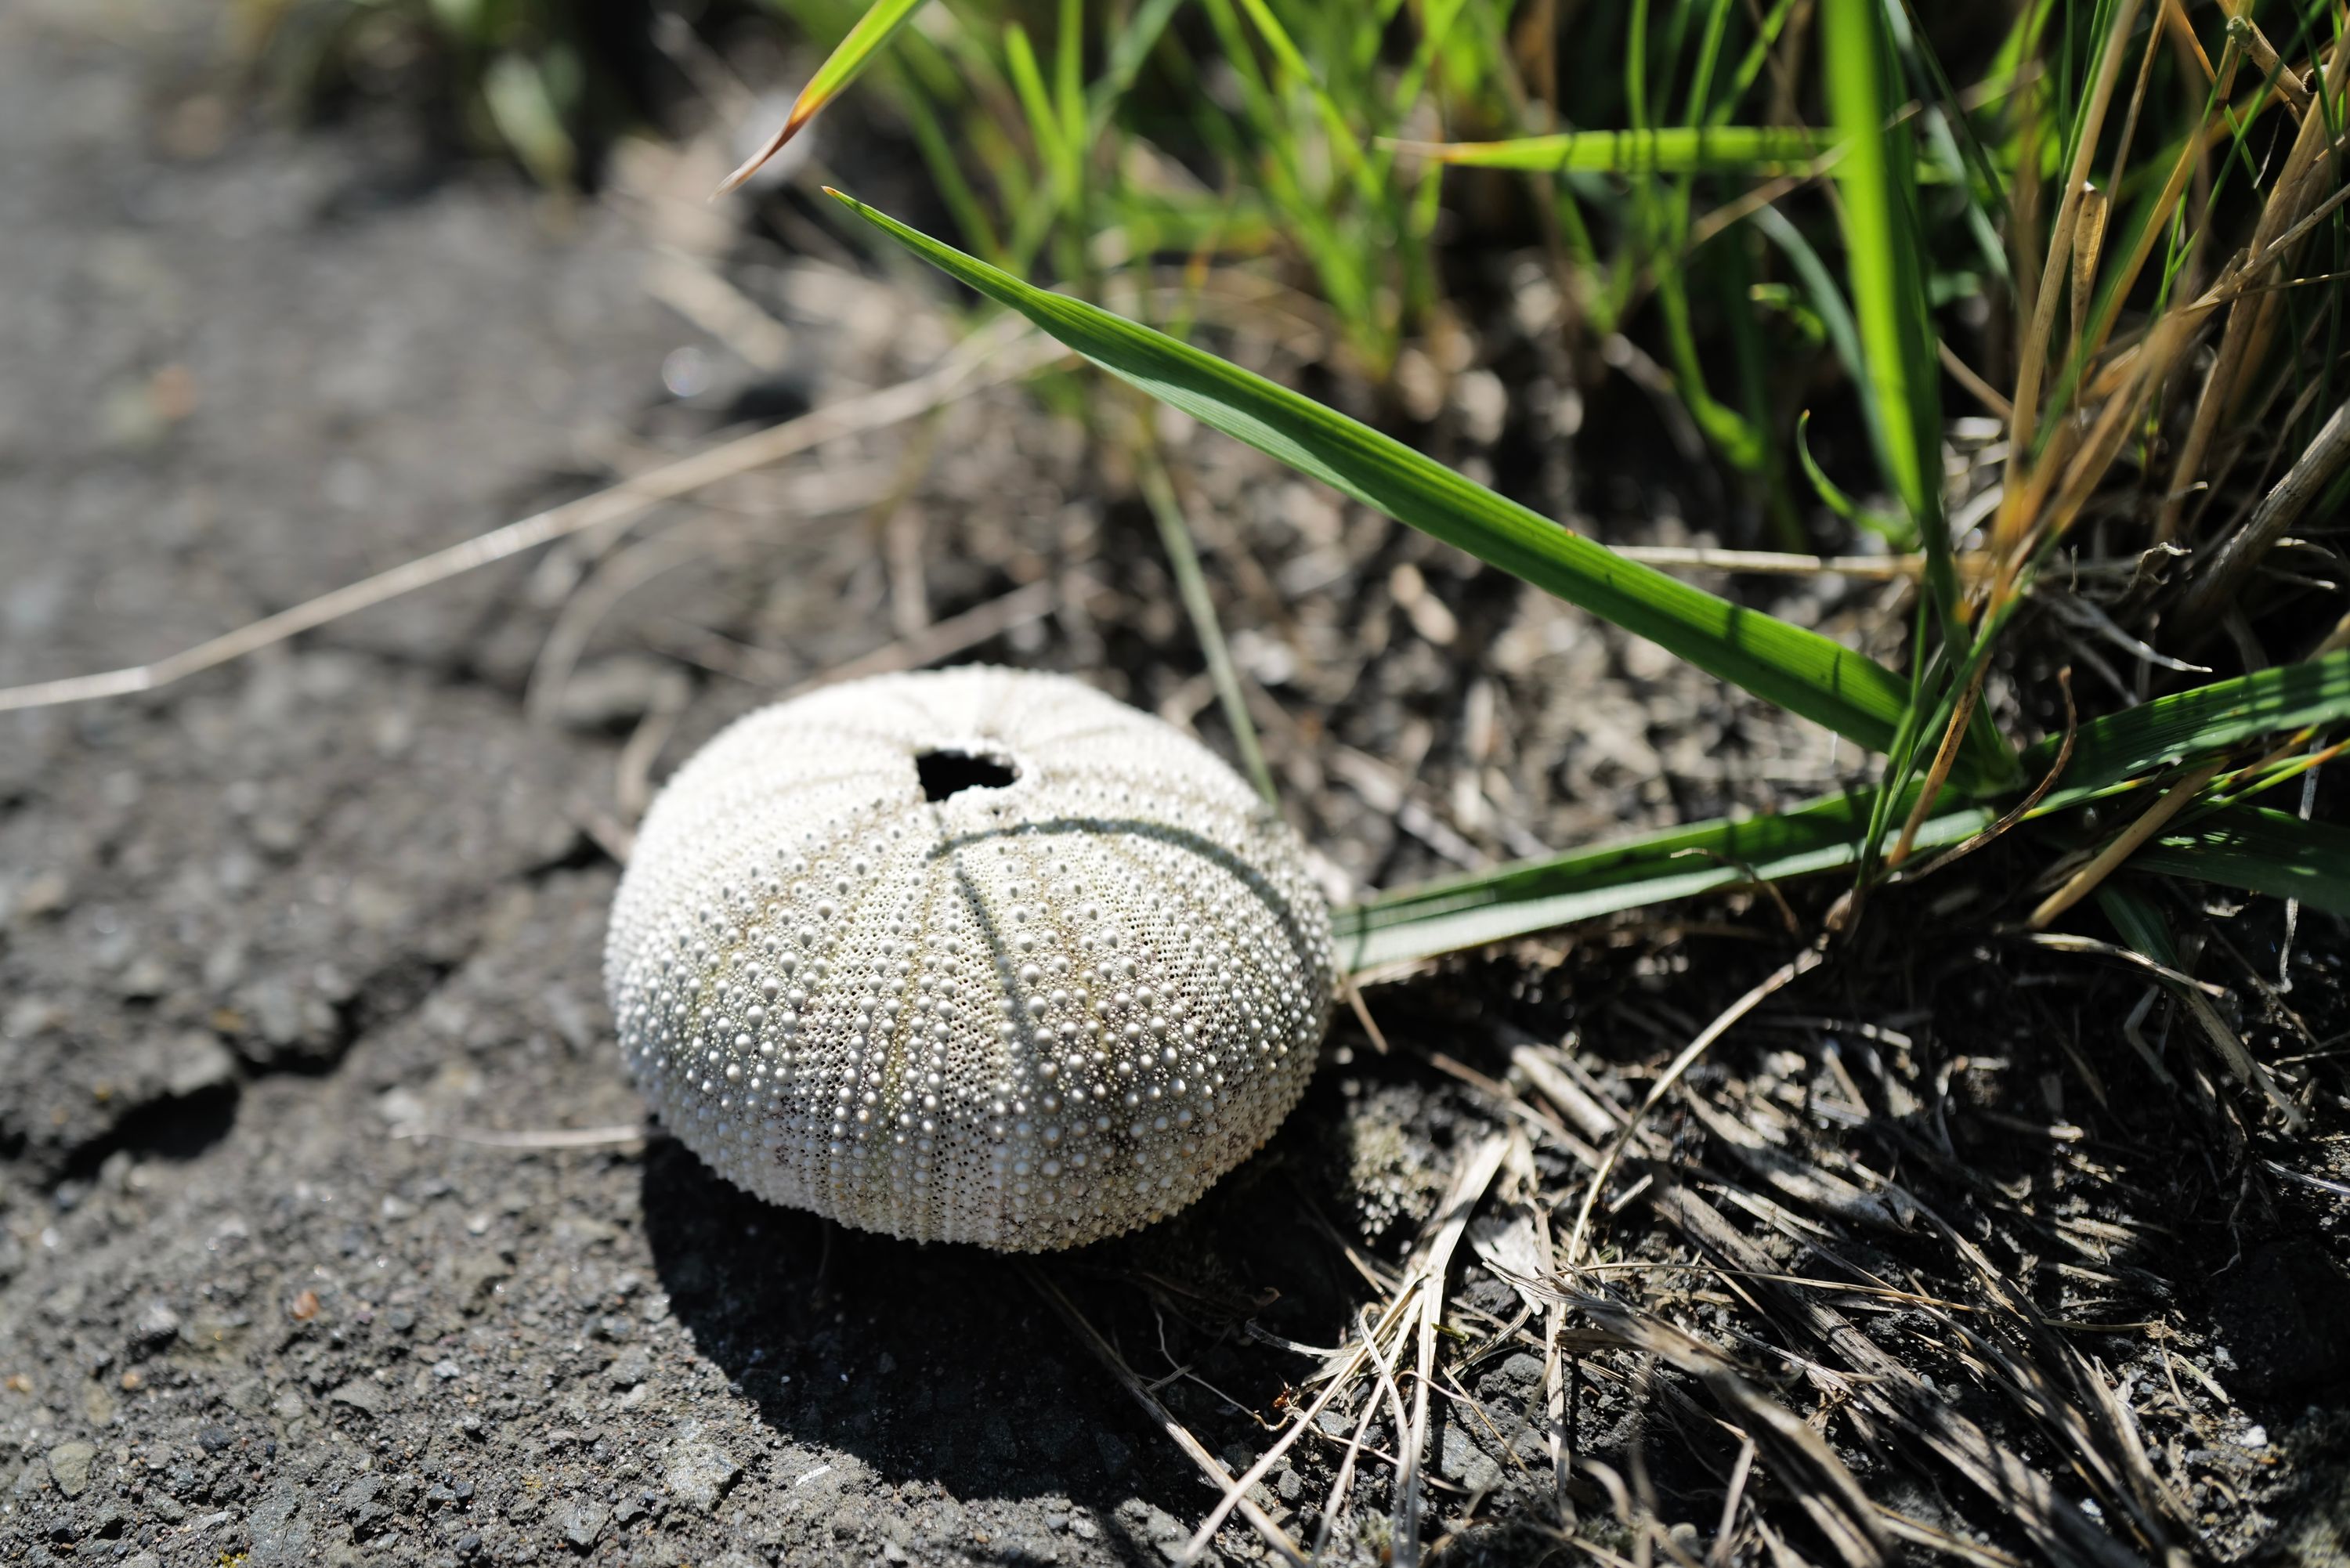 The shell of a sea urchin on a sidewalk.